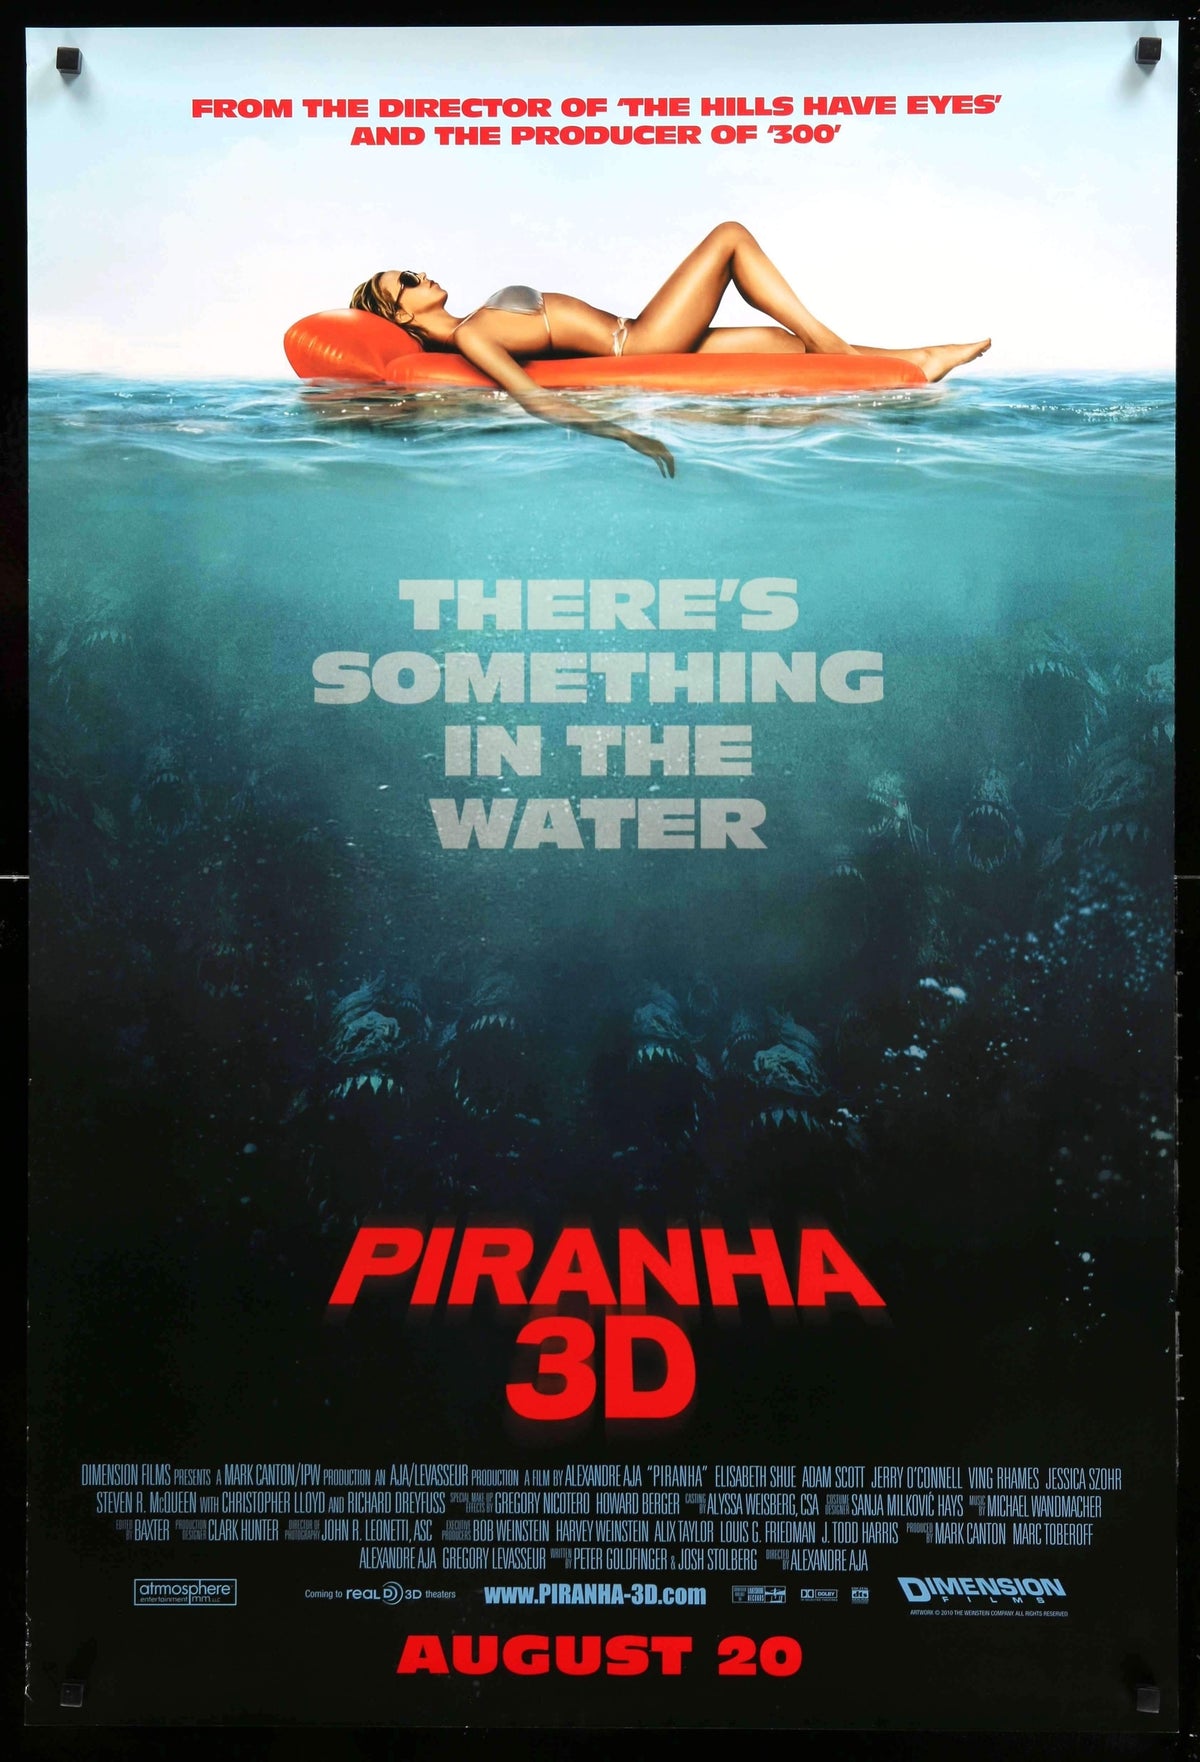 Piranha 3D (2010) original movie poster for sale at Original Film Art